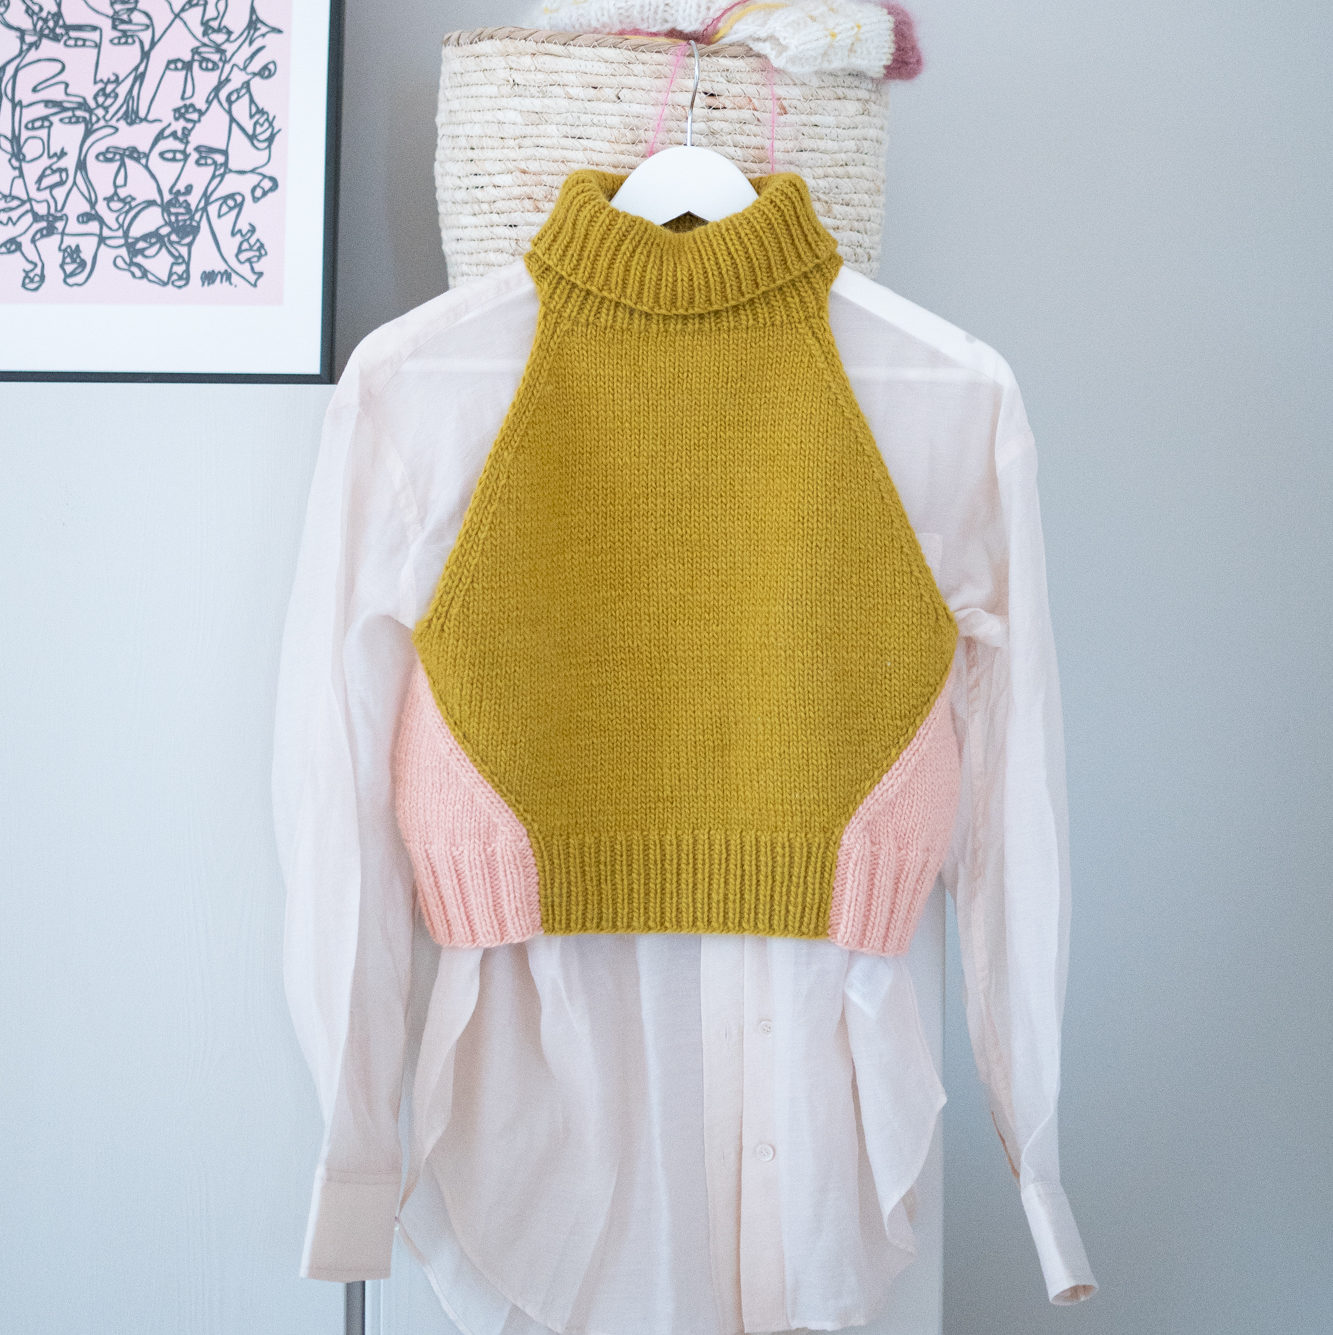  - Futu knitted vest | Womens slipover | Knitting kit - by HipKnitShop - 13/11/2020